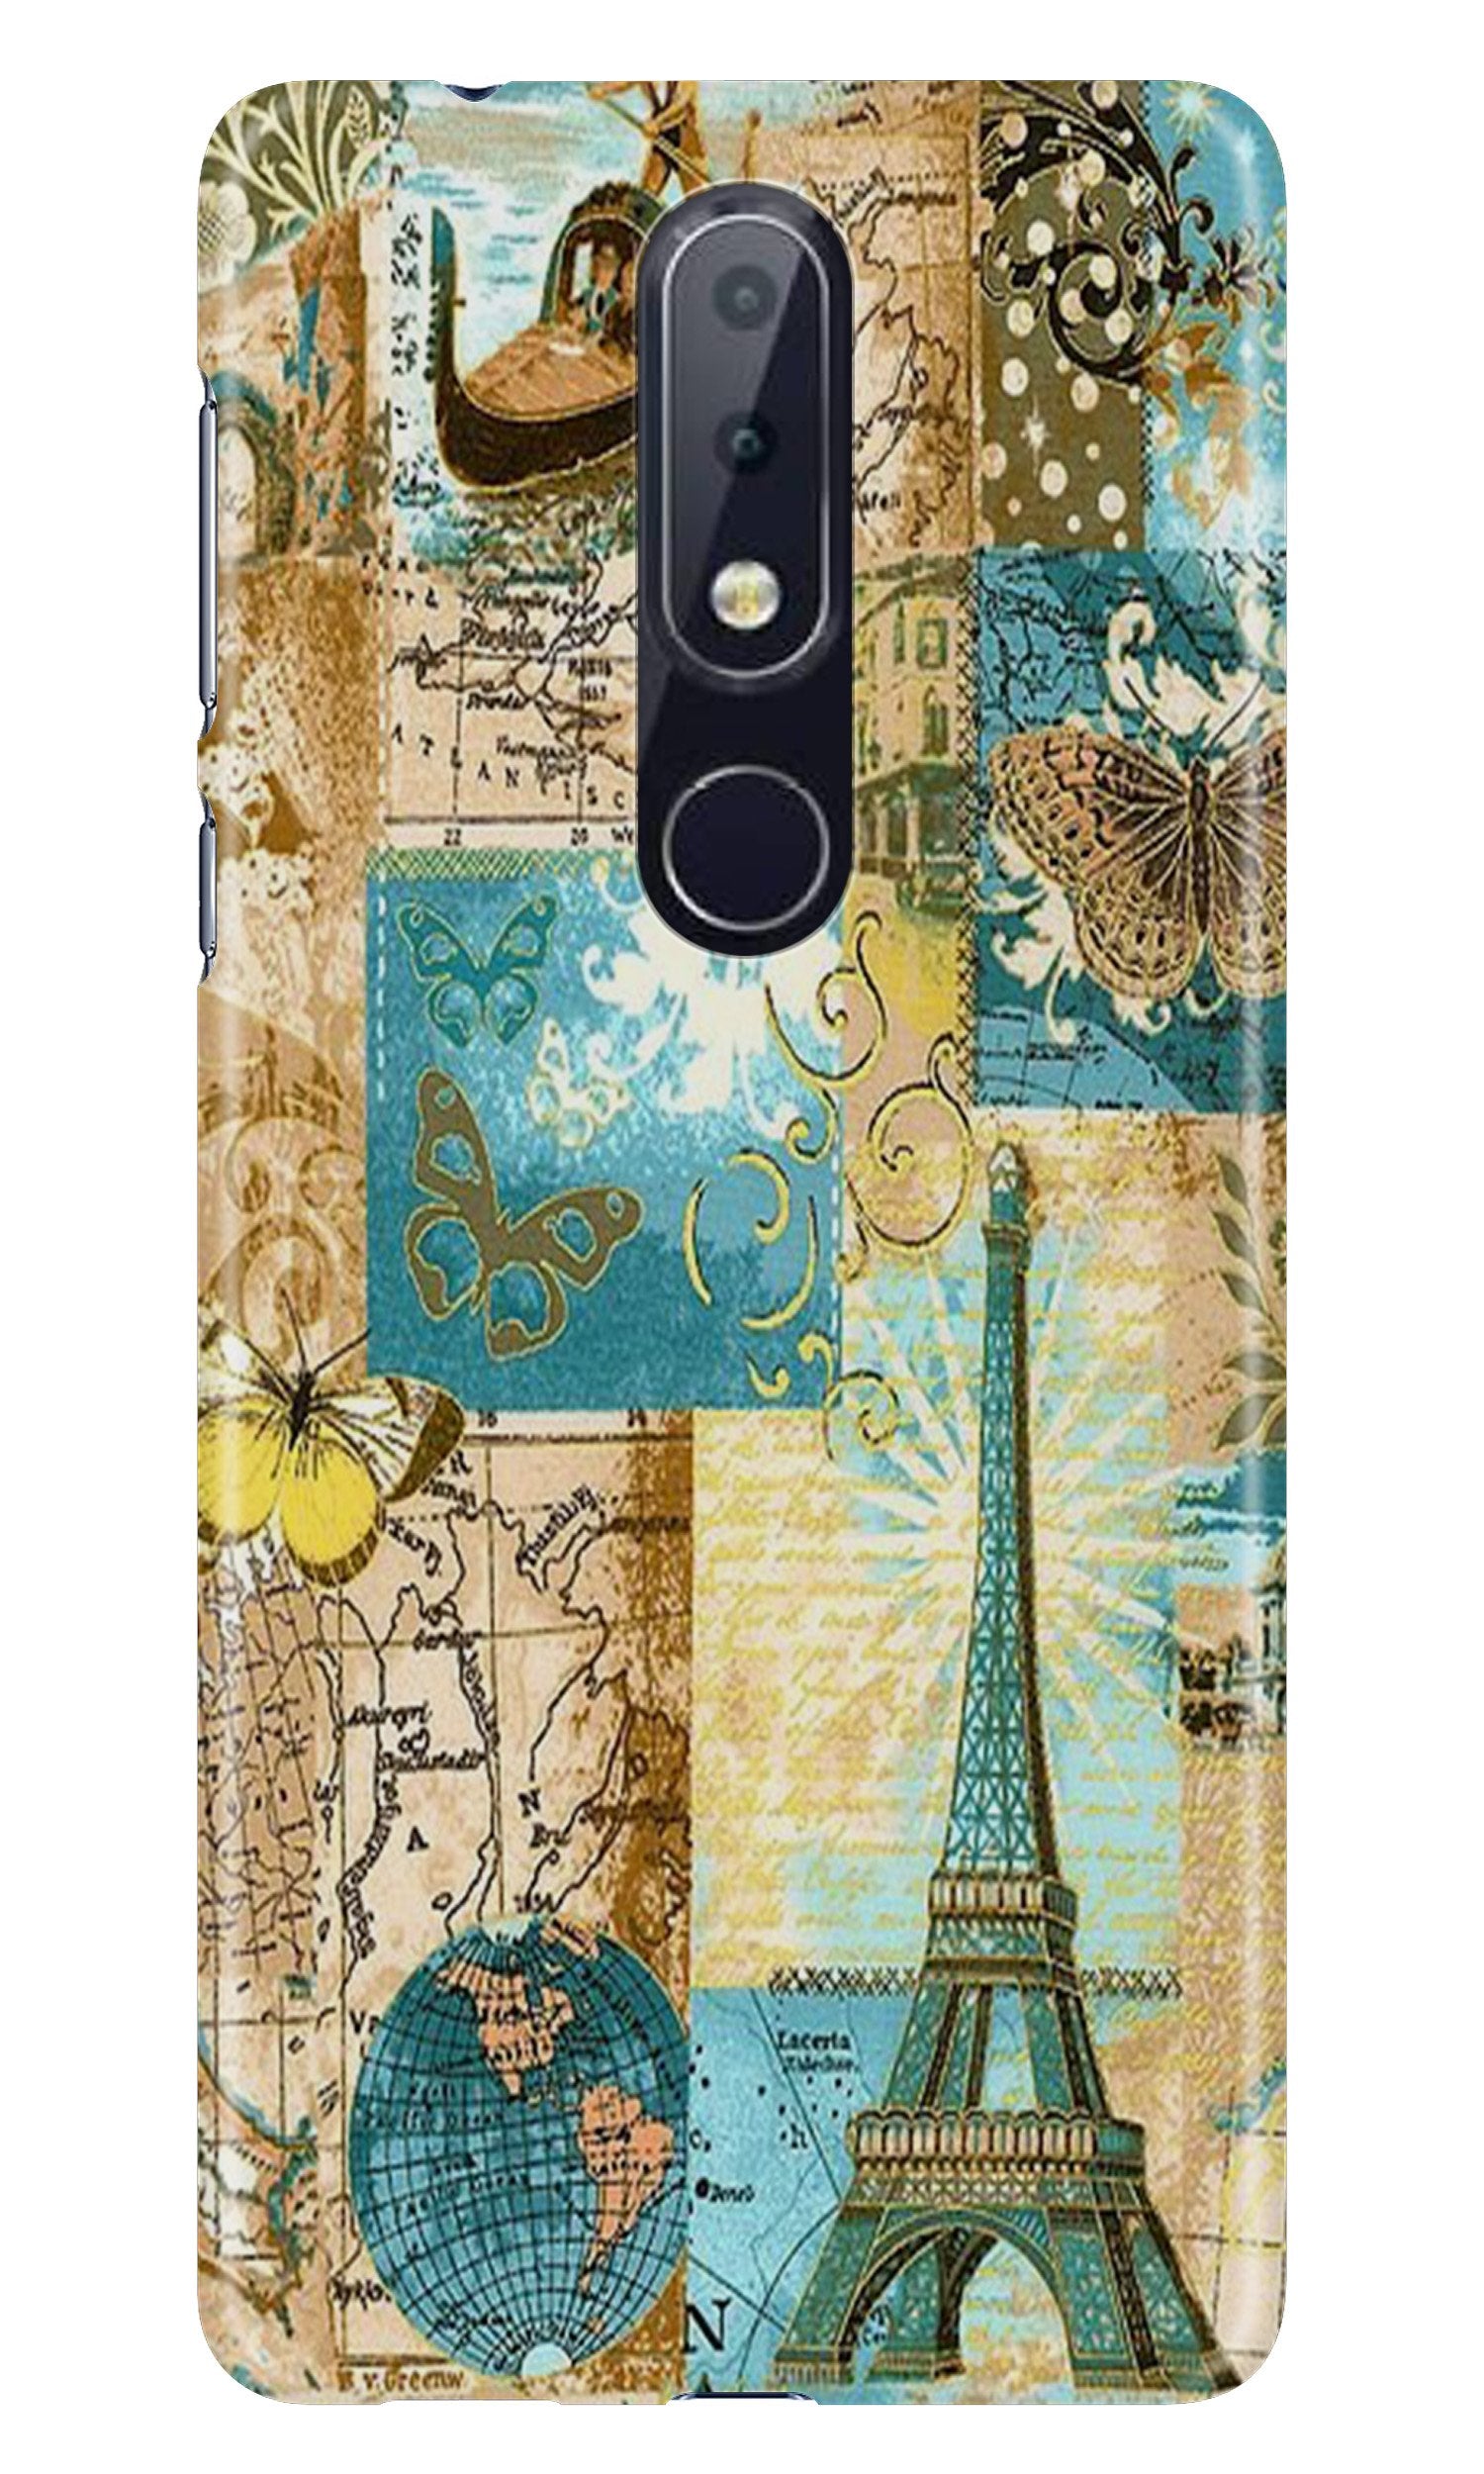 Travel Eiffel Tower  Case for Nokia 4.2 (Design No. 206)